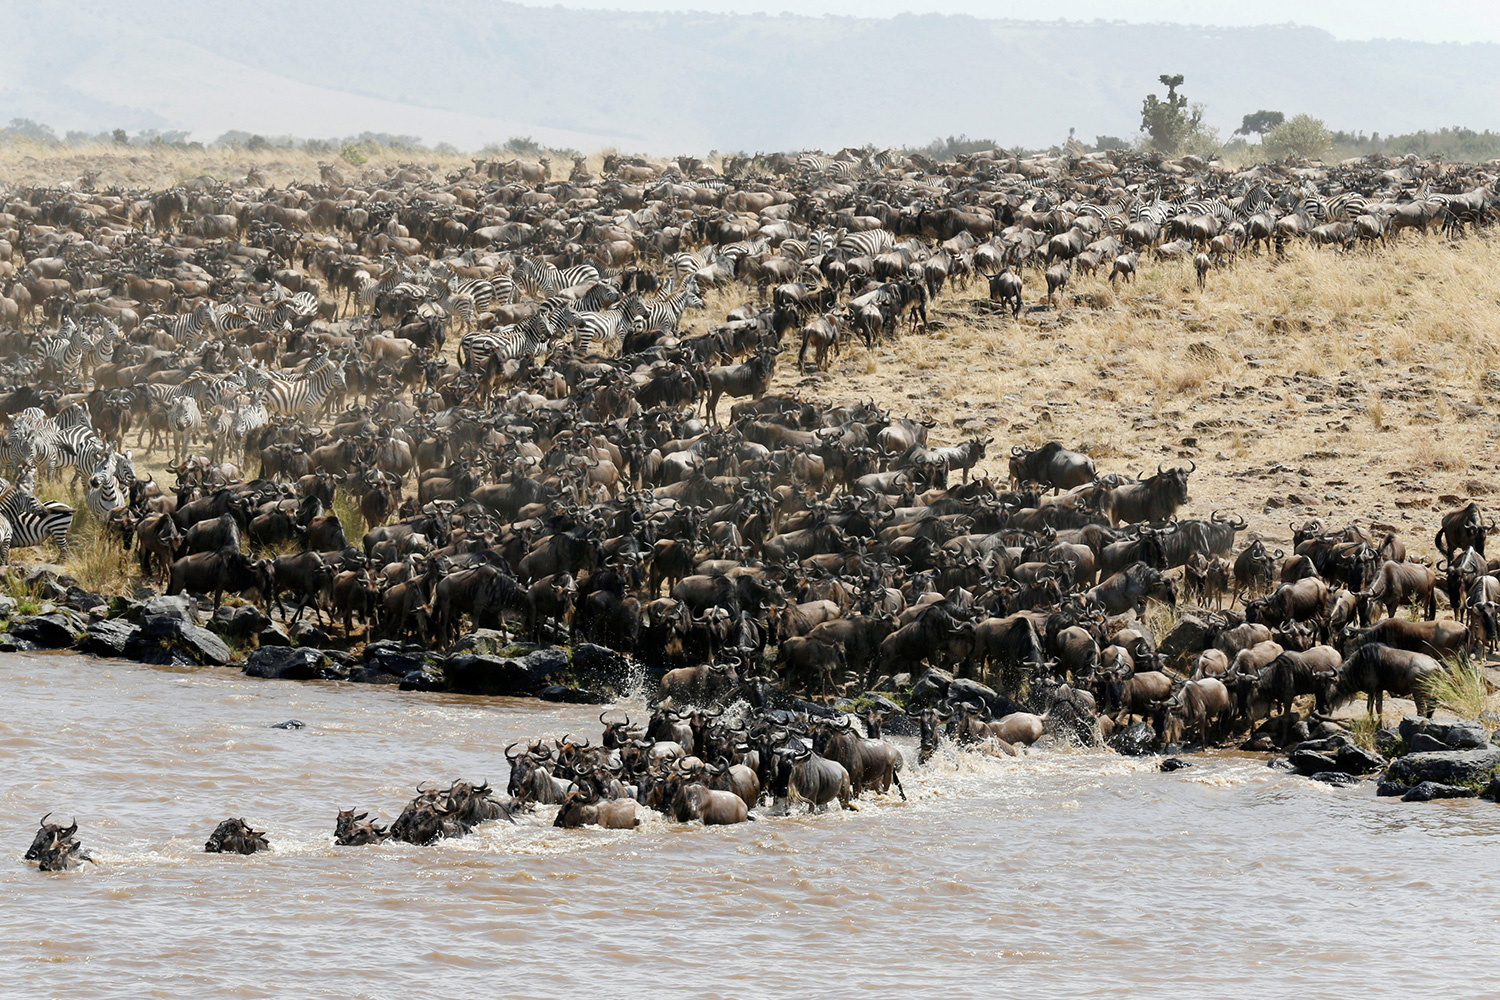 La gran migración del ñu hacia la reserva natural Maasai Mara